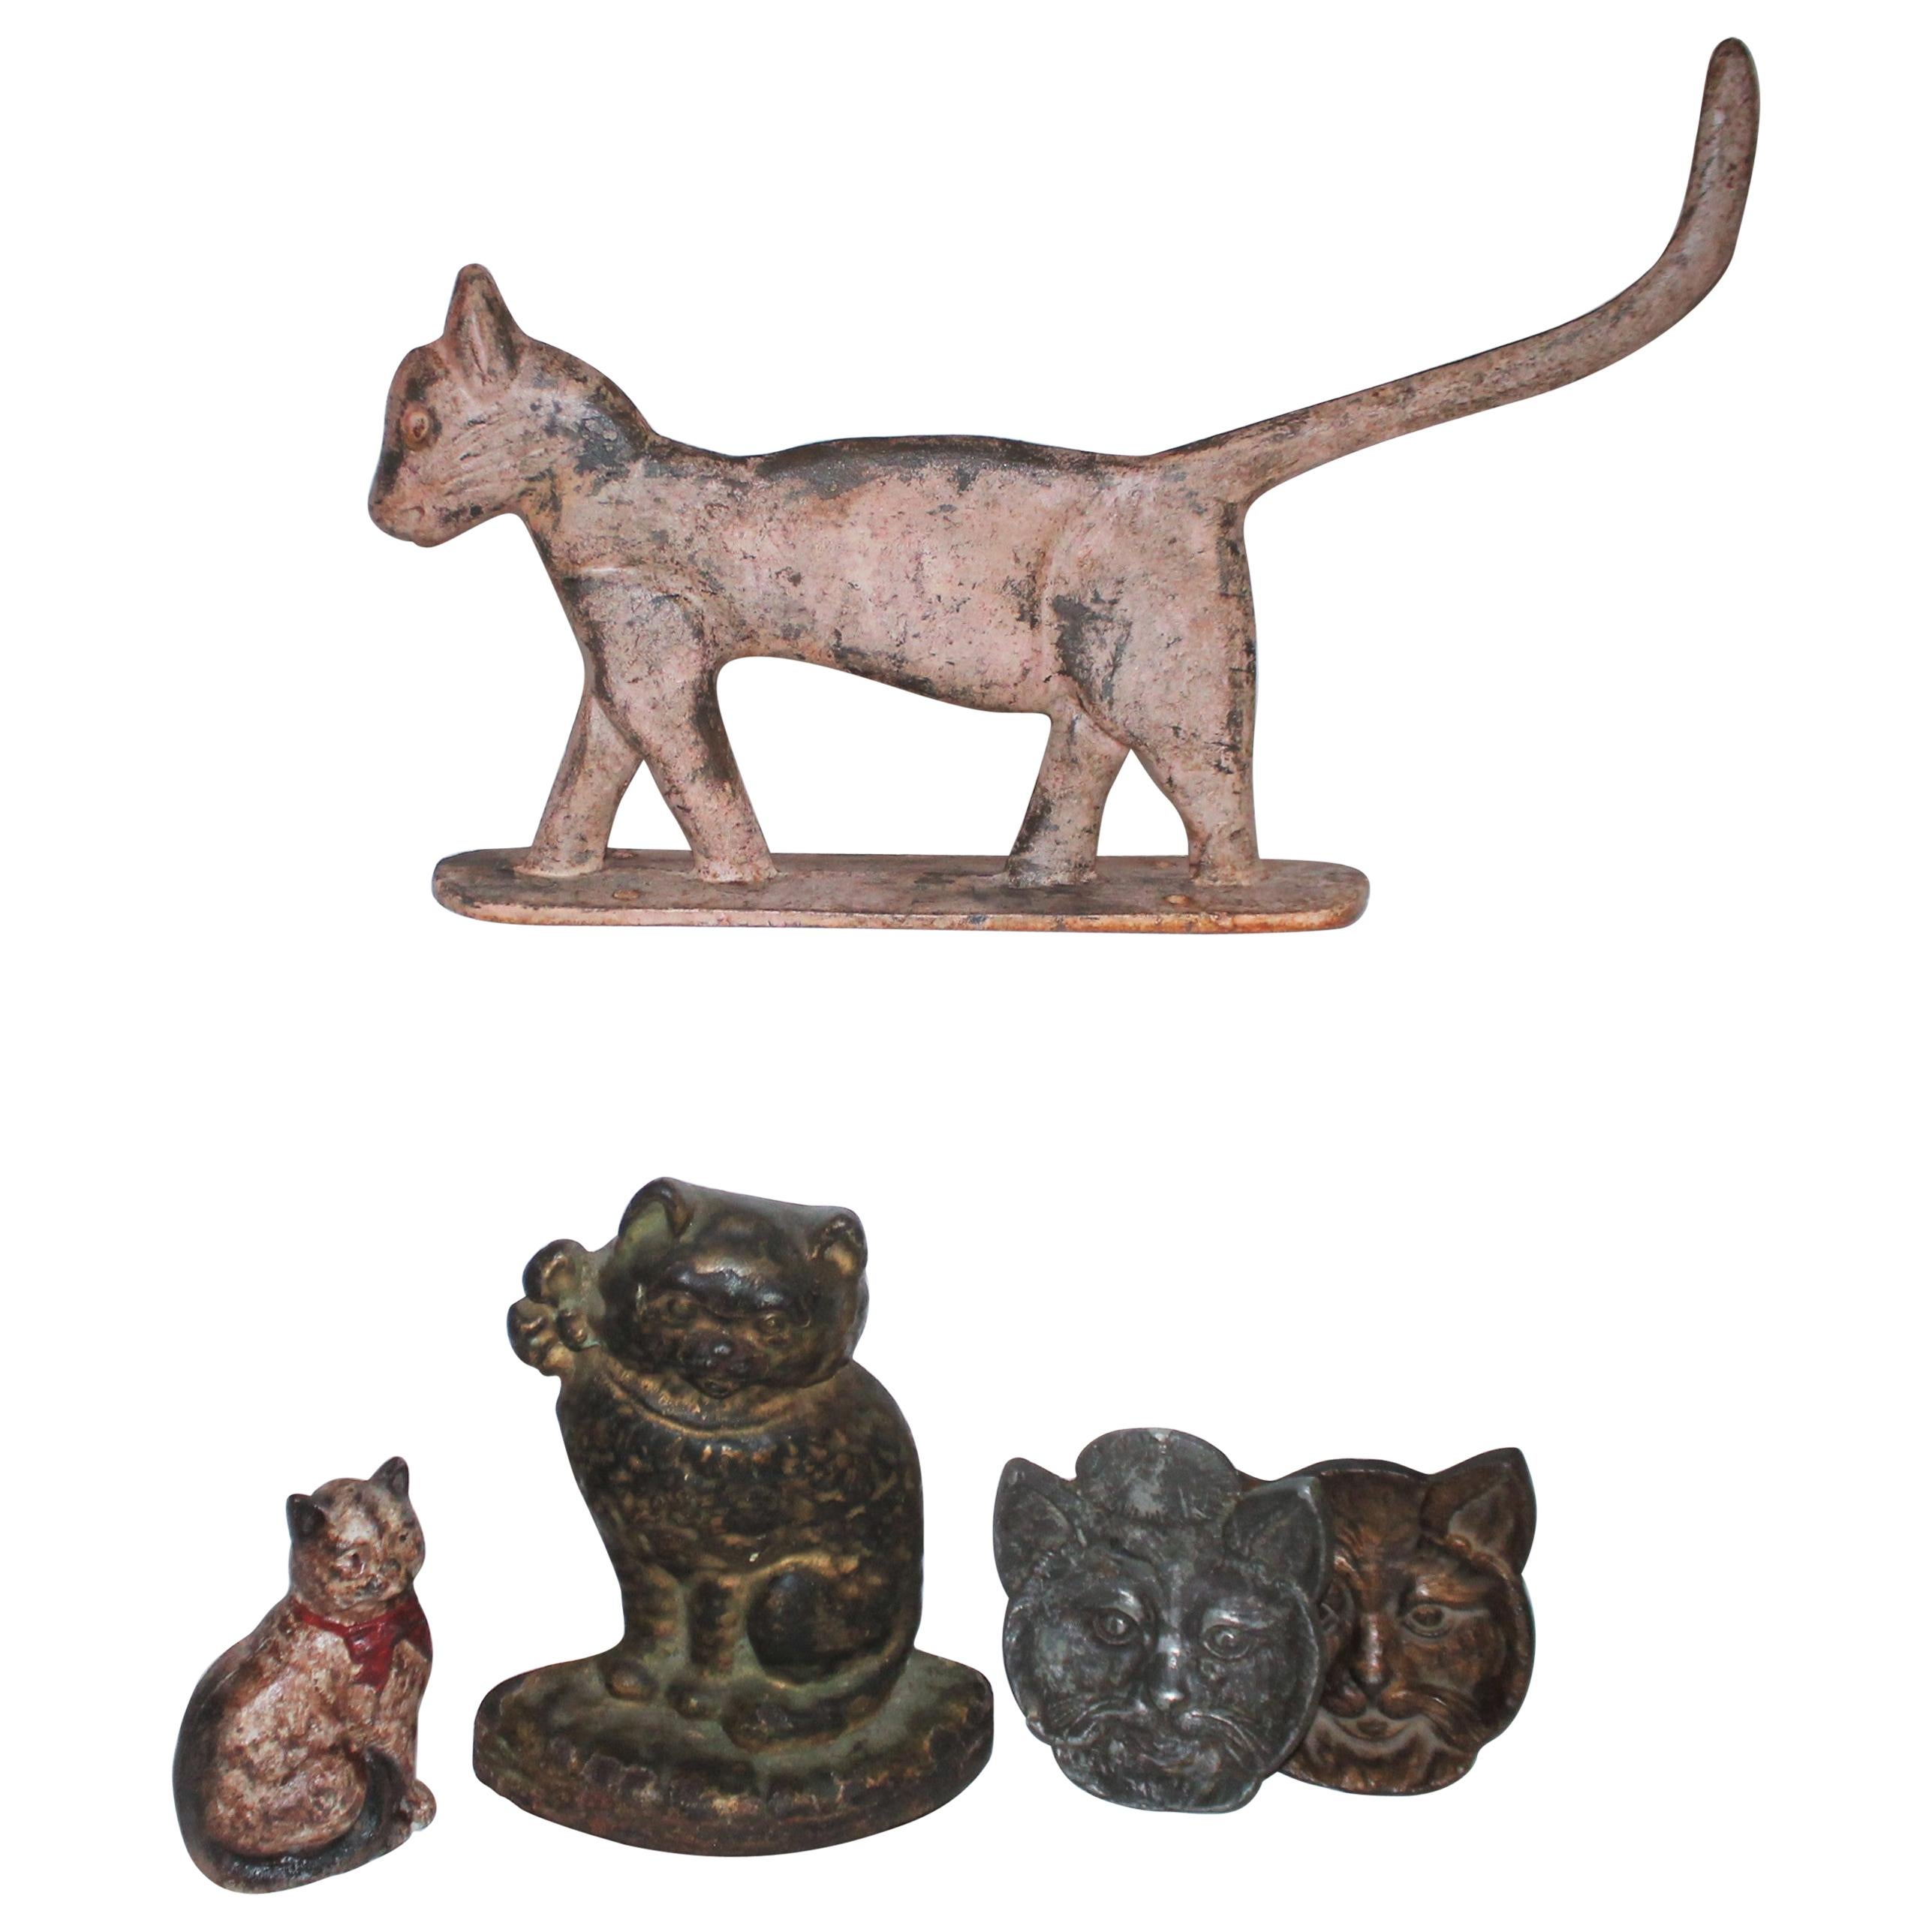 Kollektion primitiver Eisenkatten aus dem 19. Jahrhundert